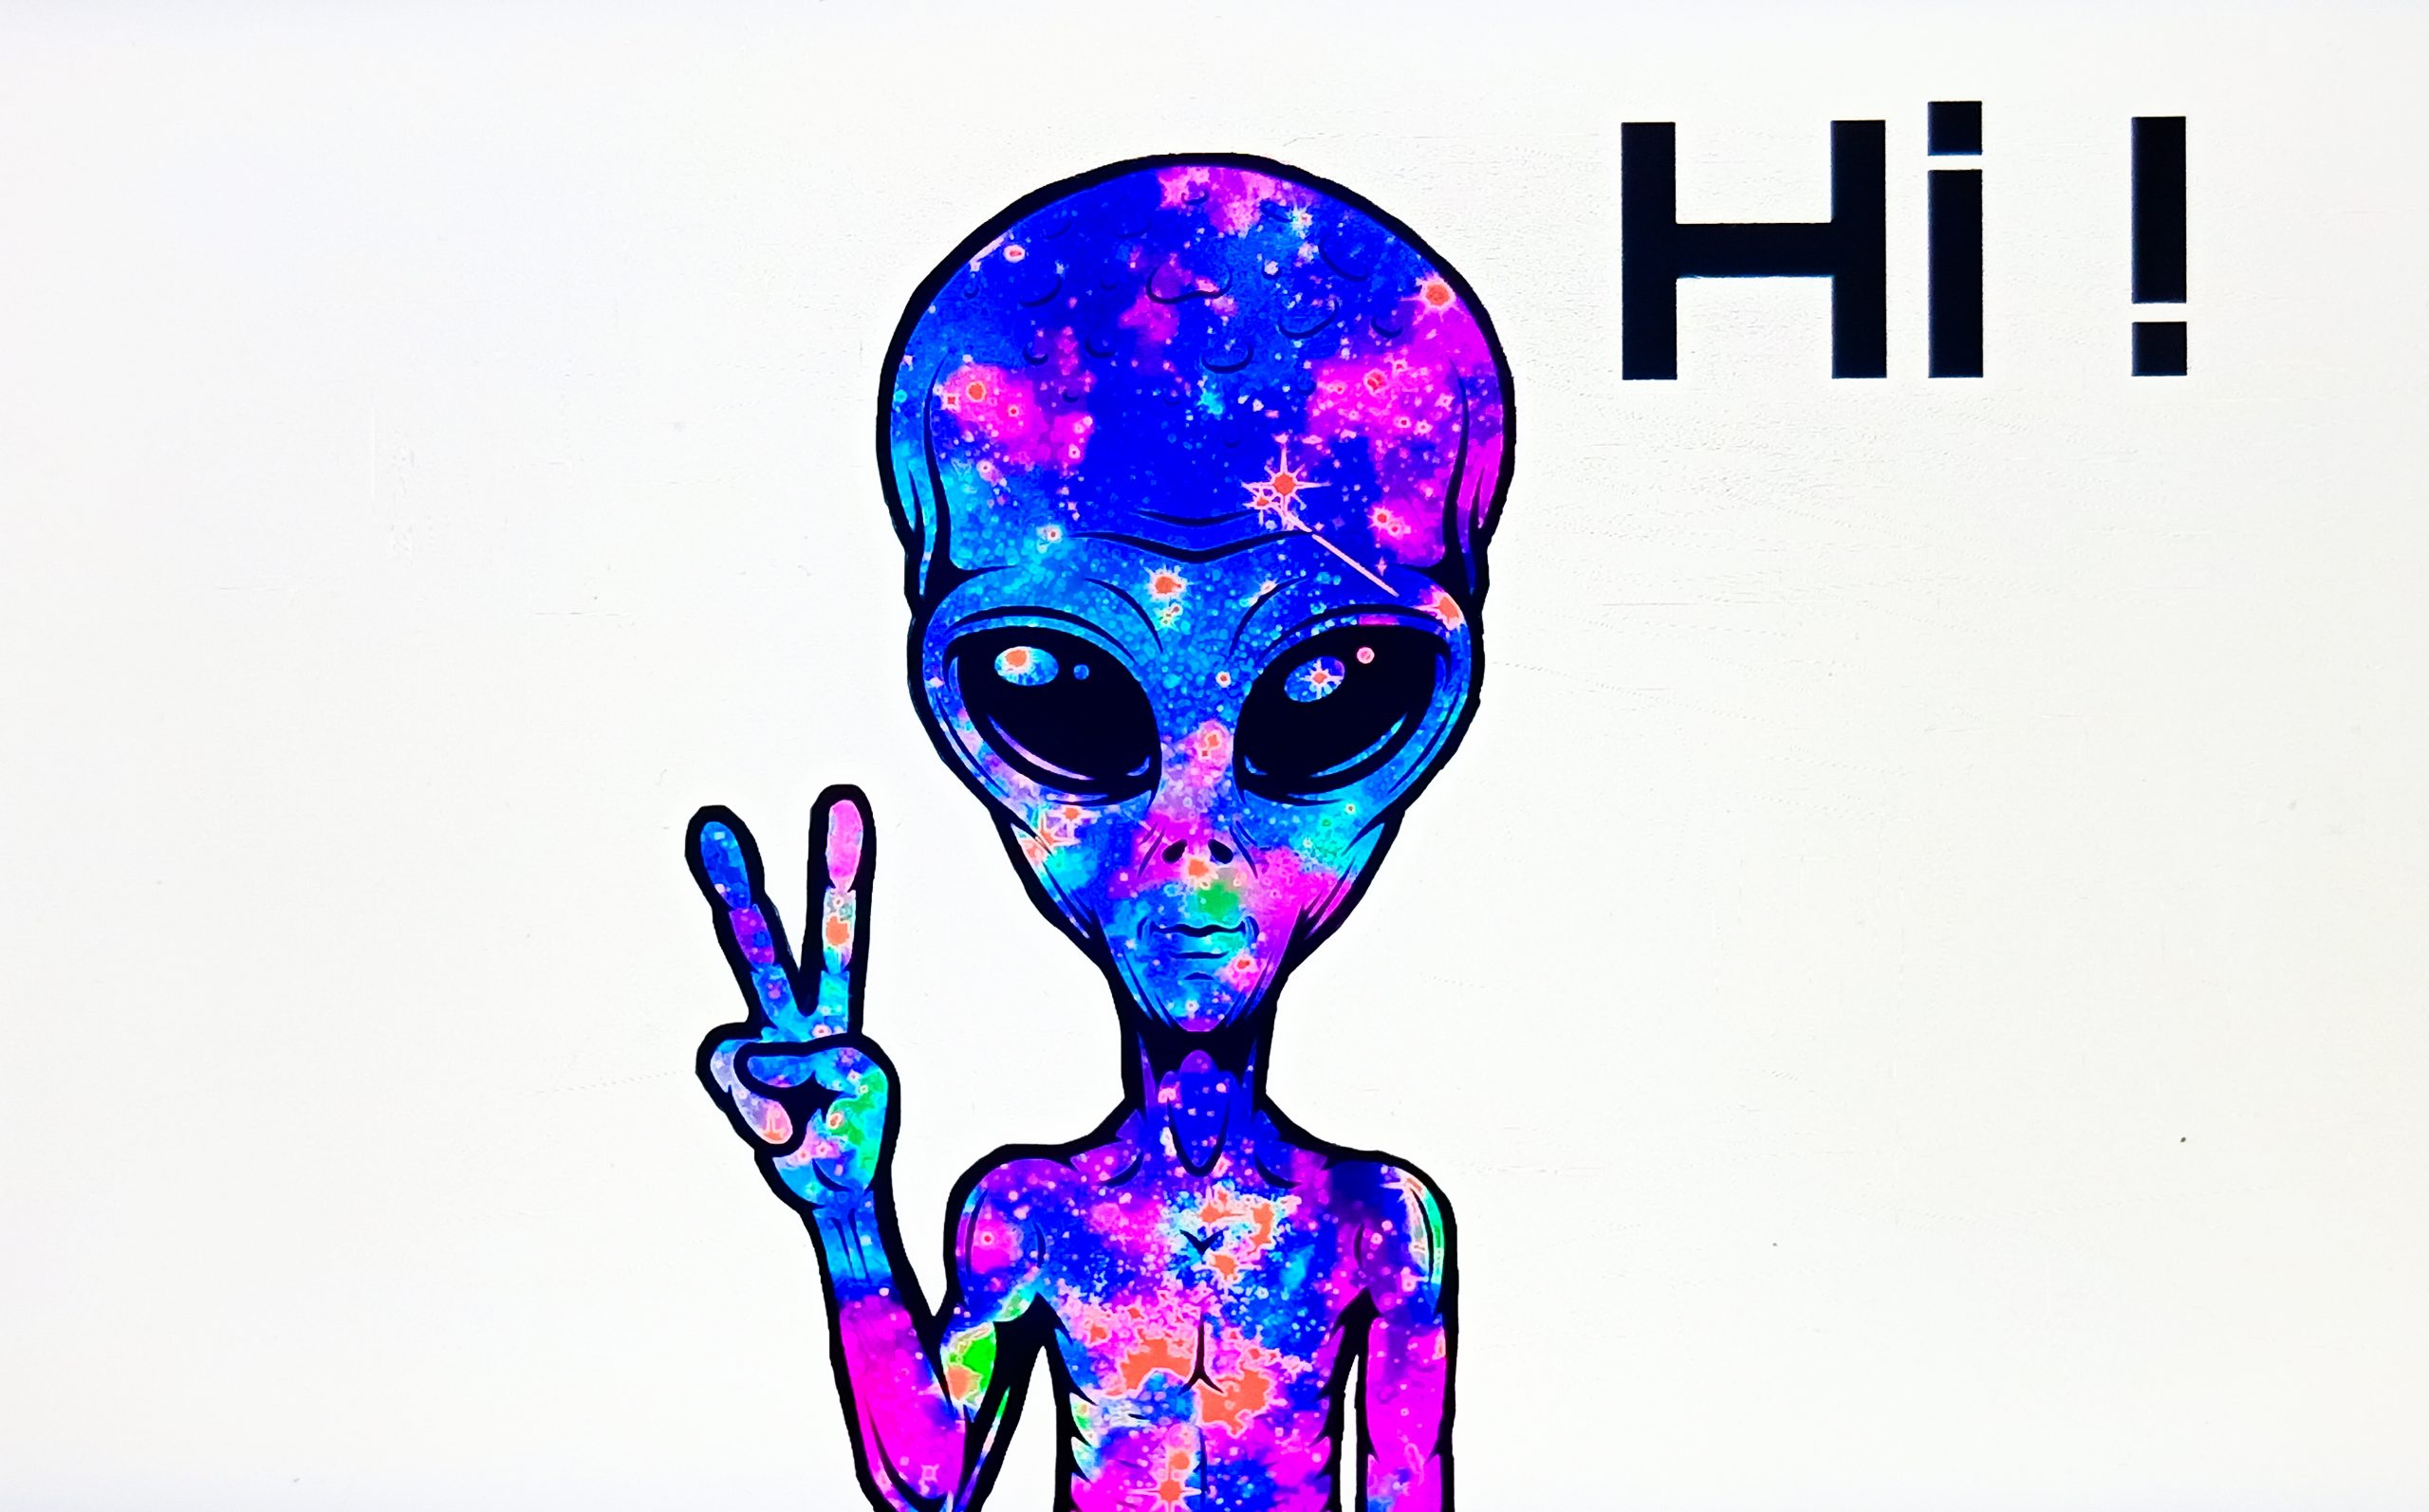 Alien greeting illustration